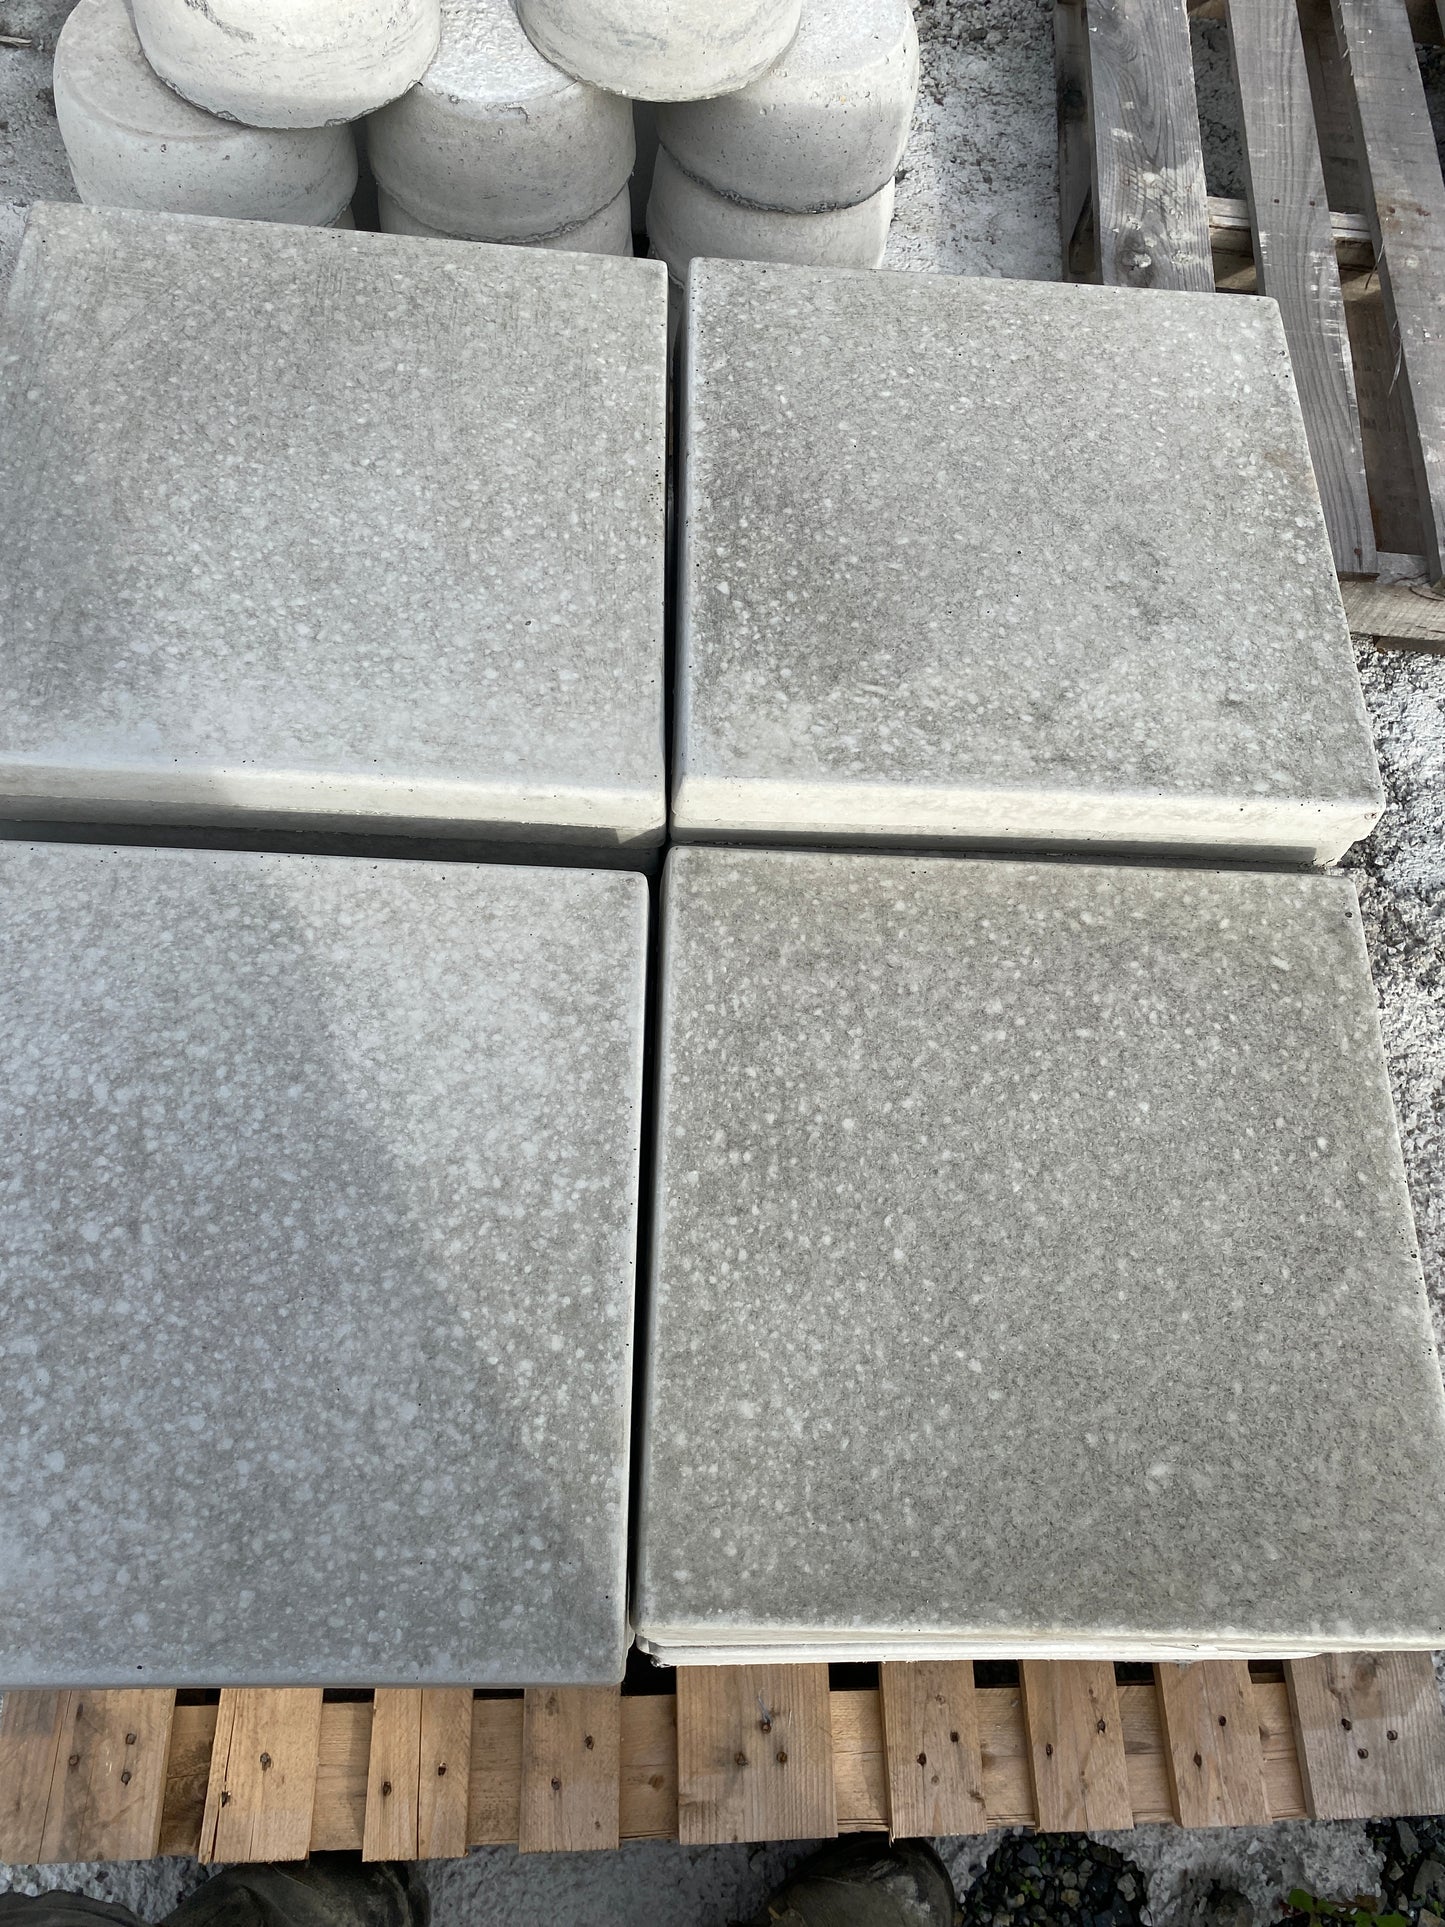 450mm x 450mm x 40mm thick Concrete Pavers